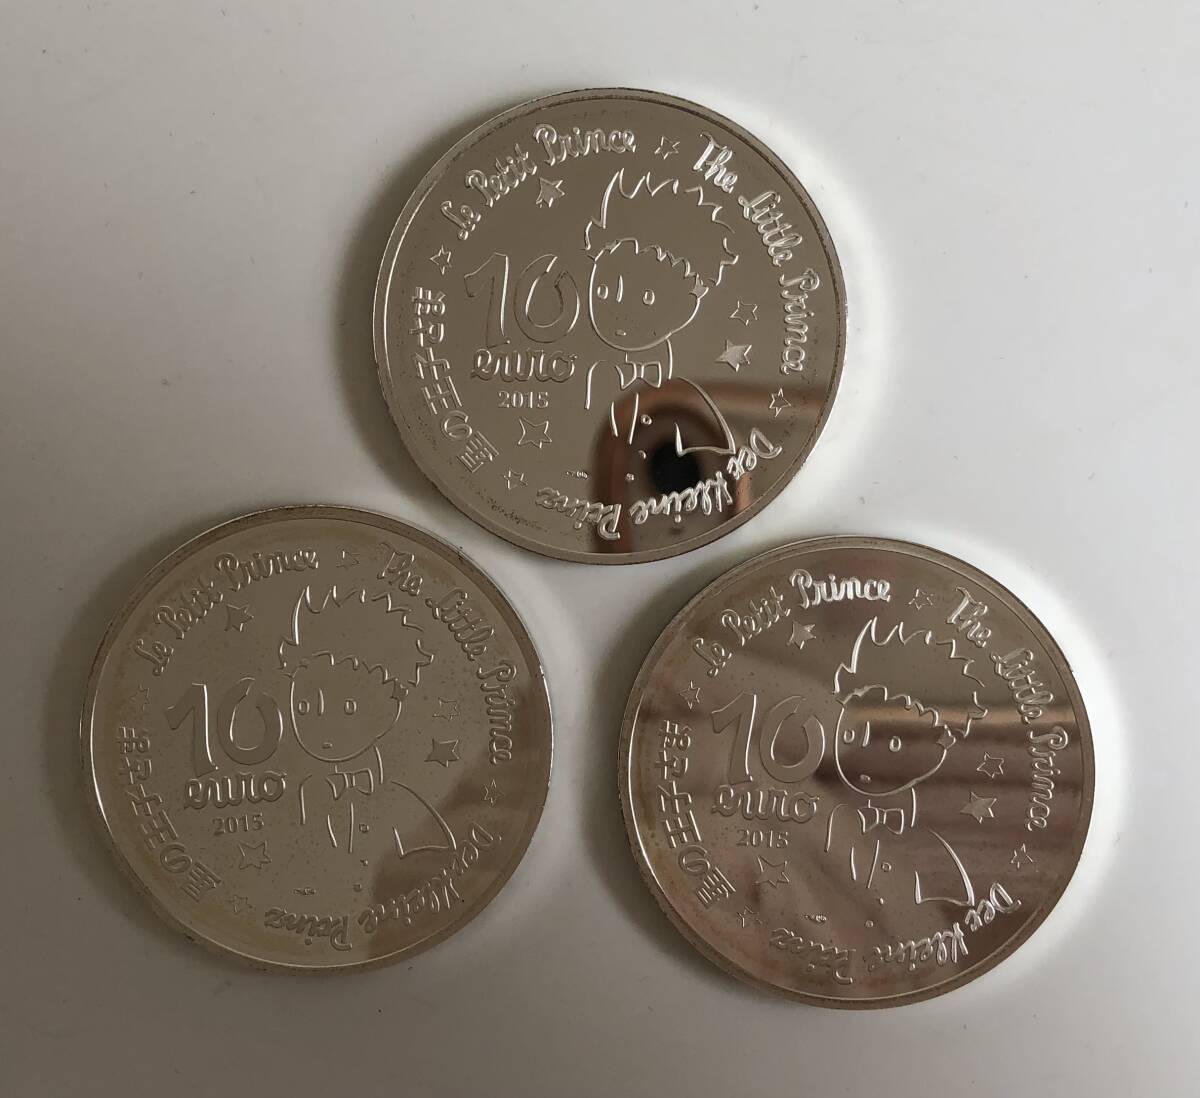 Le Petit Prince 星の王子さま フランス版発刊70周年記念コイン 2015 銀貨3種セット 10ユーロ銀貨 10euroの画像2